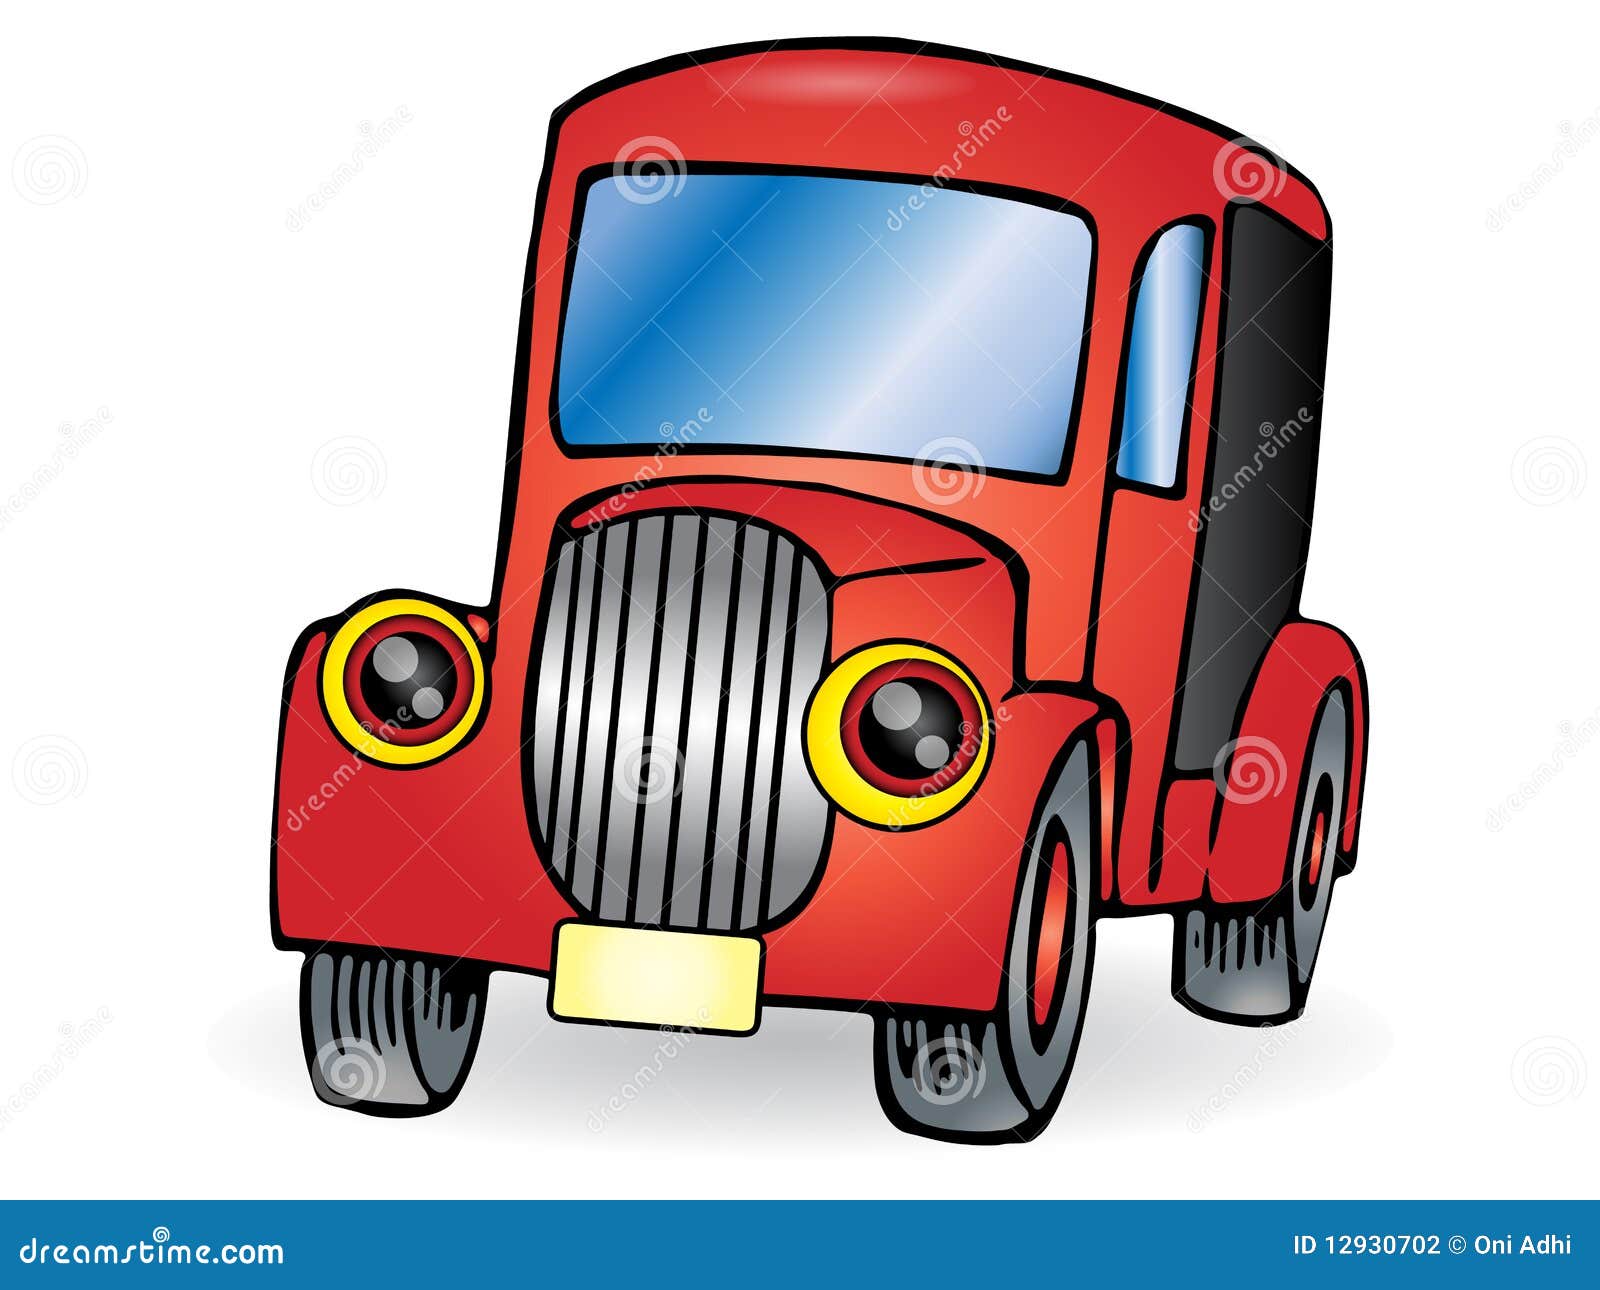 Old car cartoon stock illustration. Illustration of business - 12930702